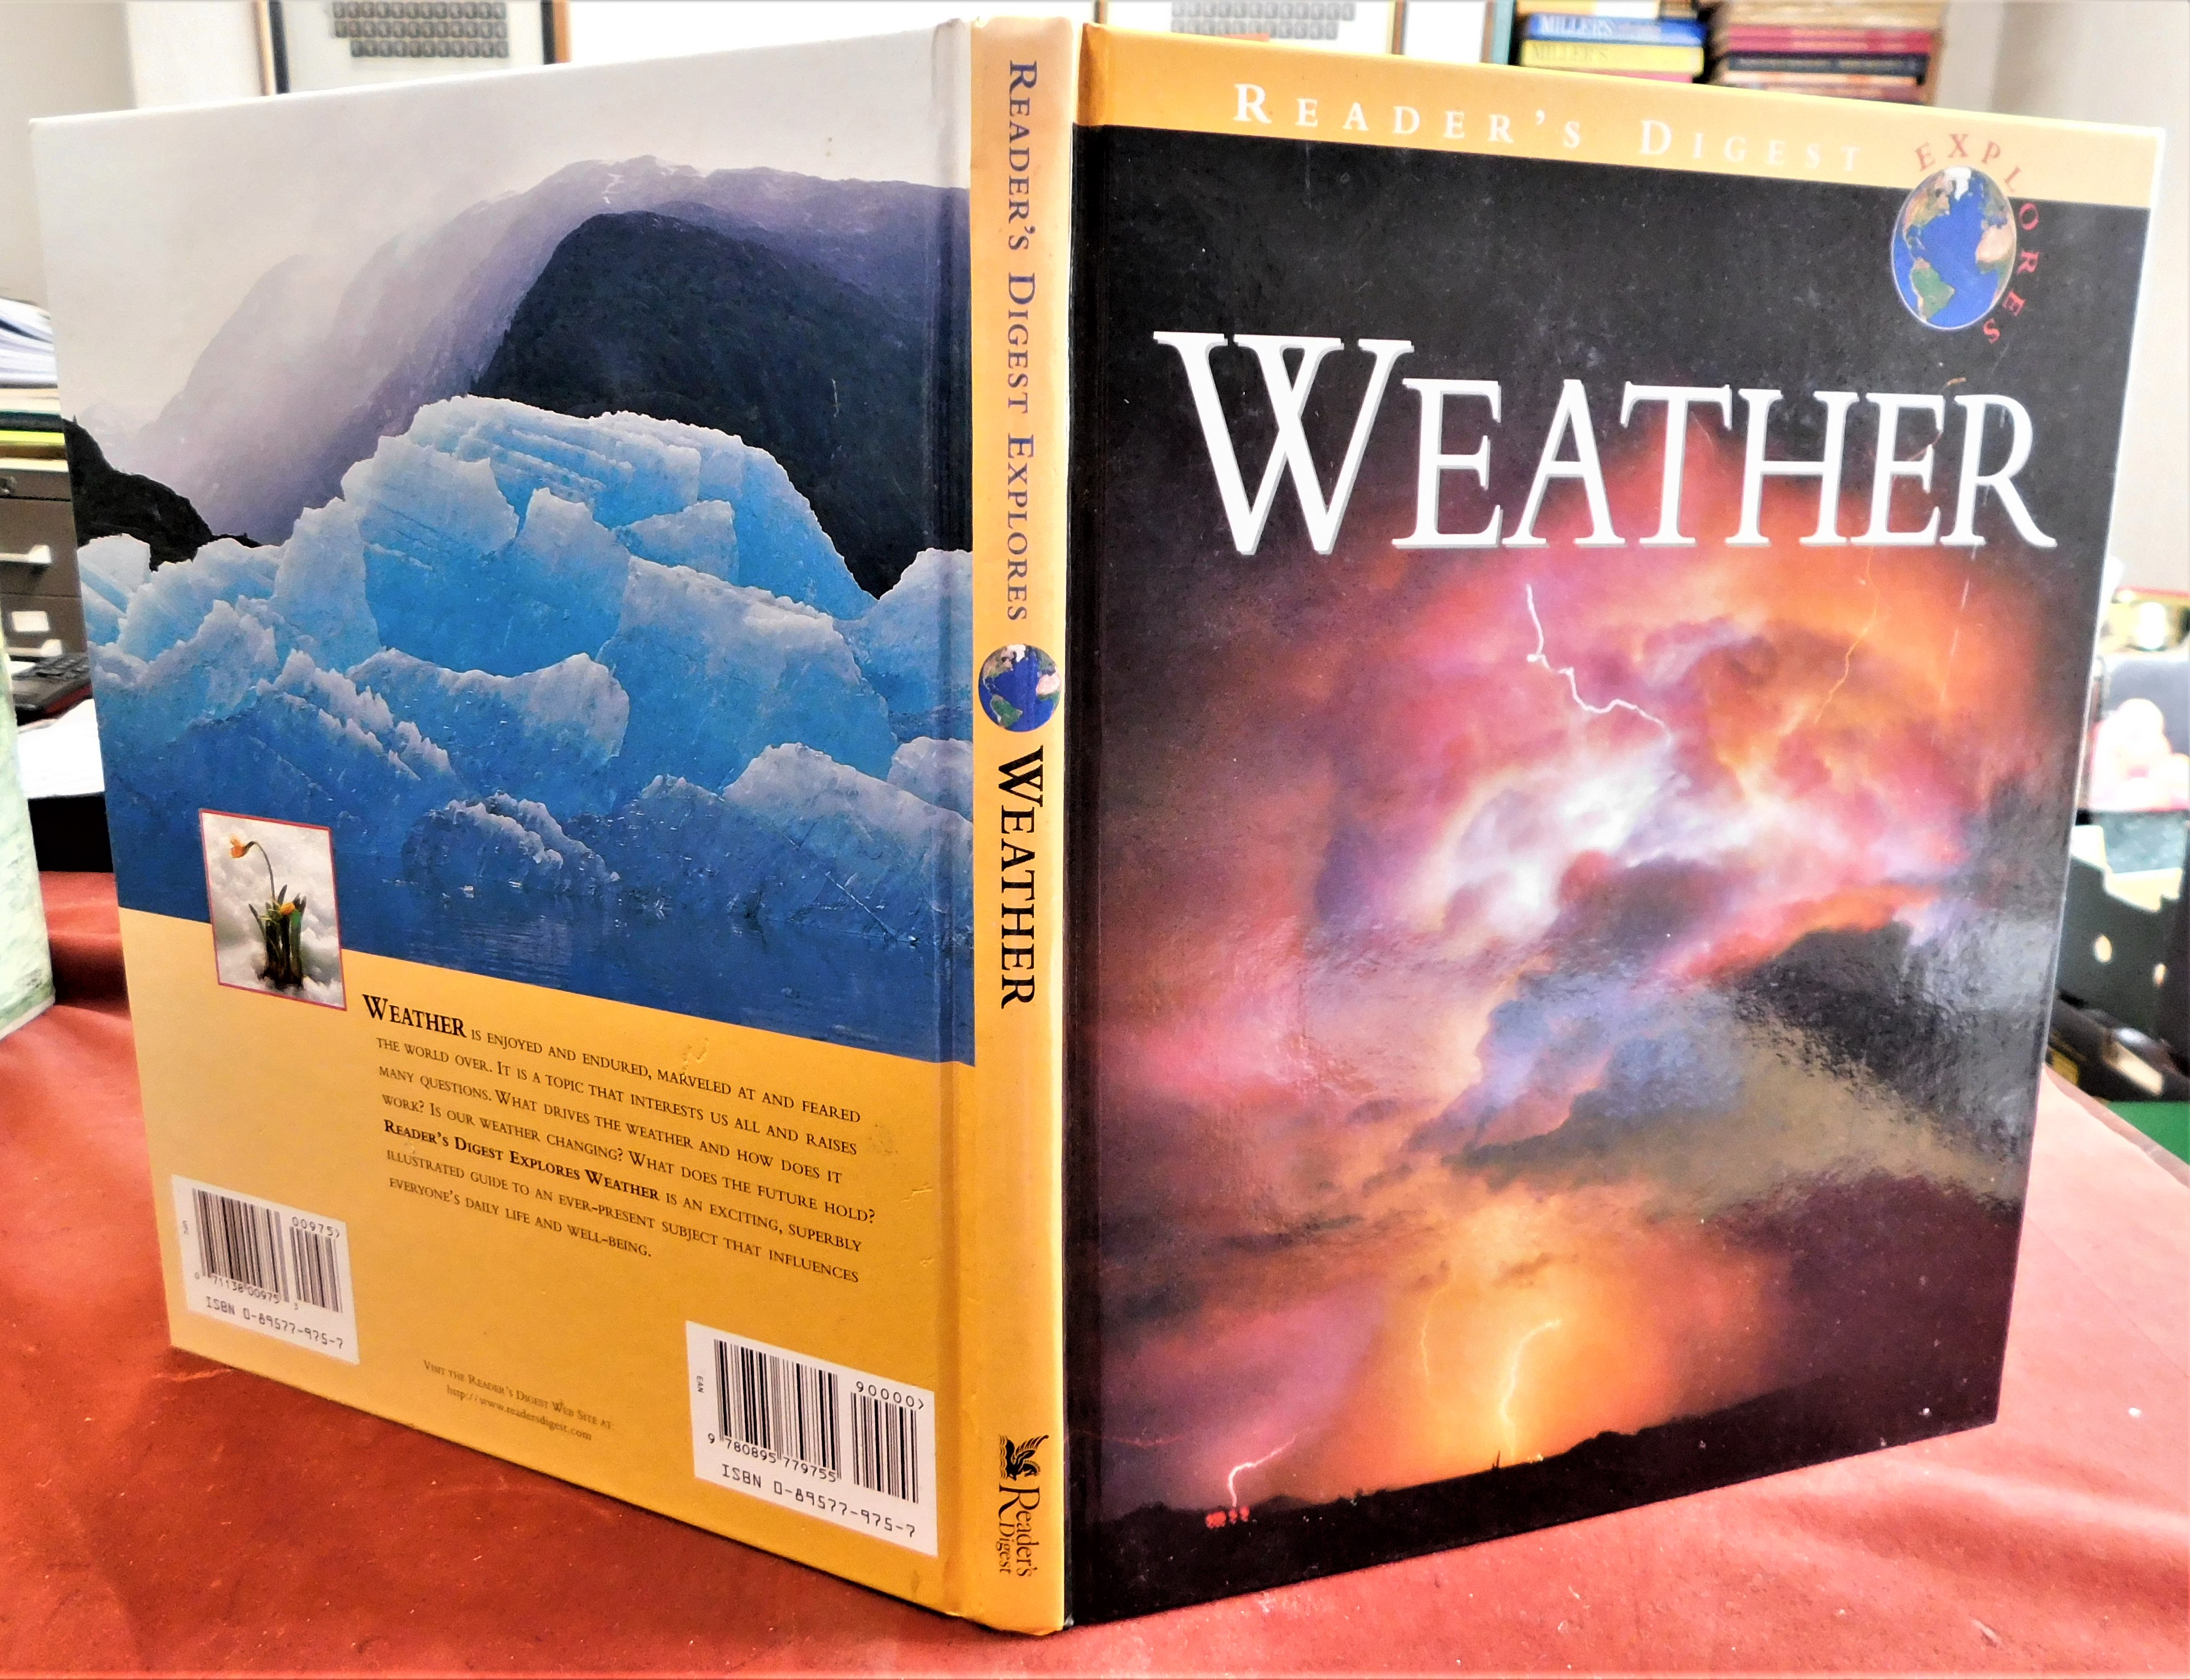 Weather- Readers Digest (1997) colour prints - excellent condition